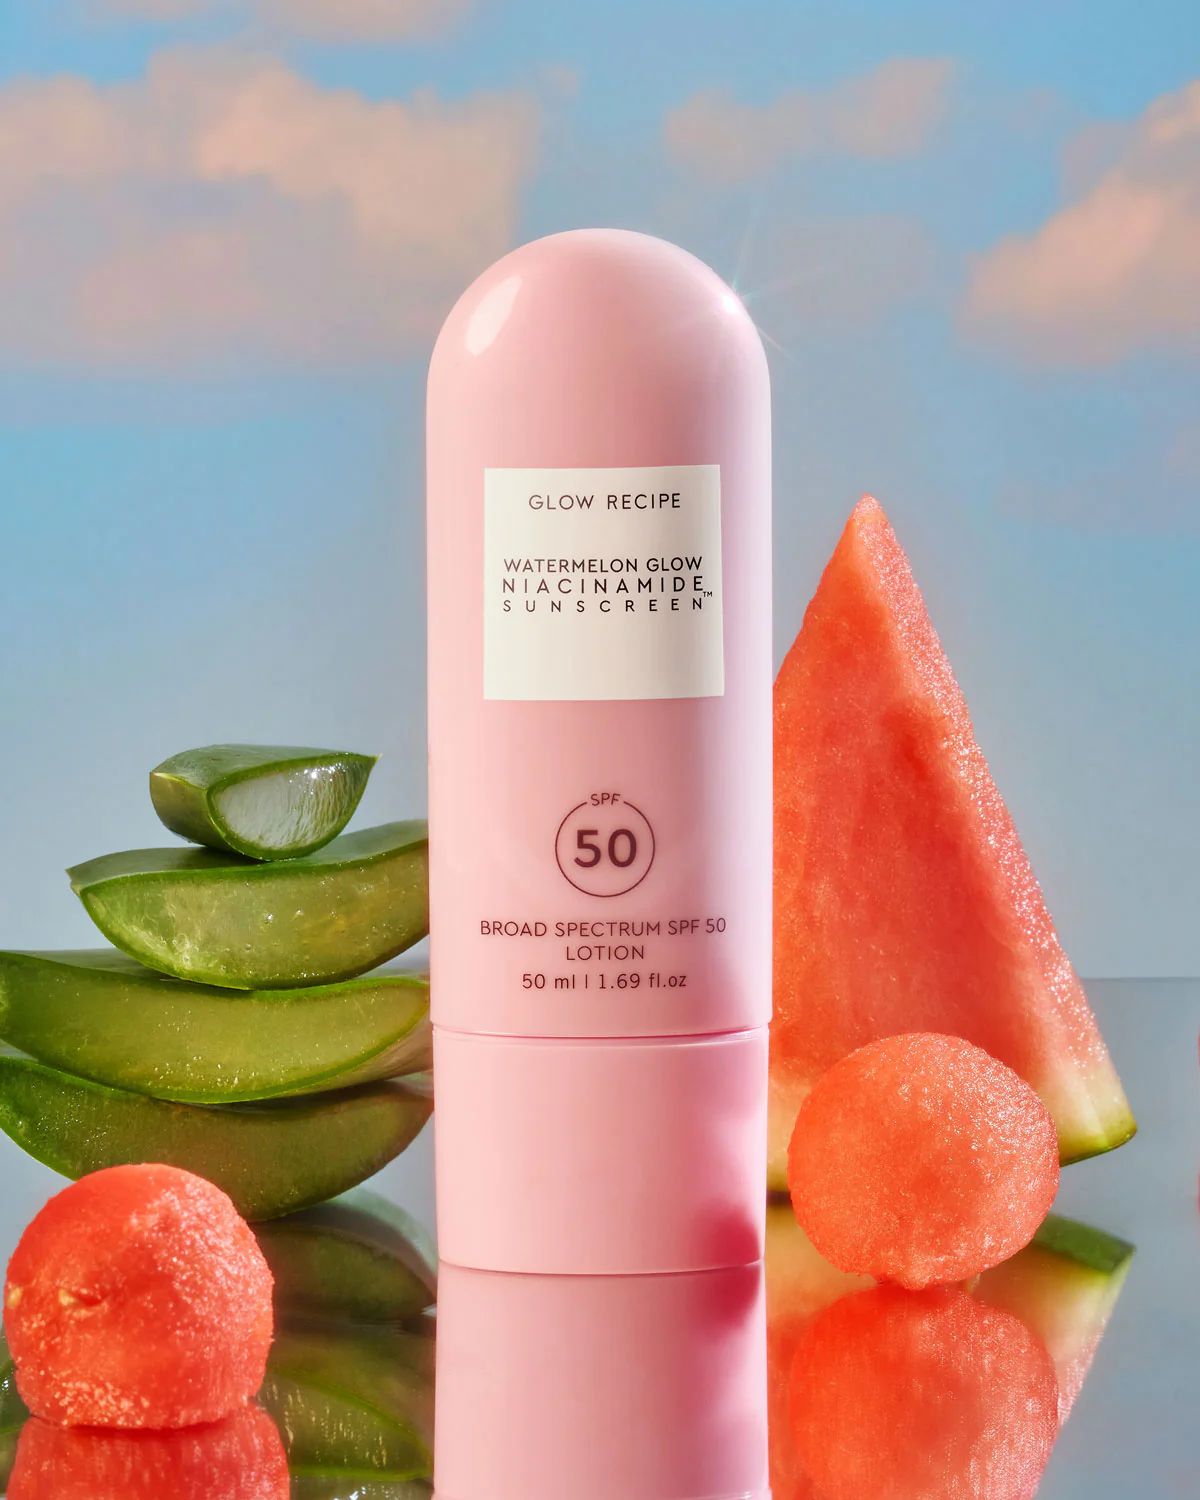 Watermelon Glow Niacinamide Sunscreen SPF 50 | Glow Recipe